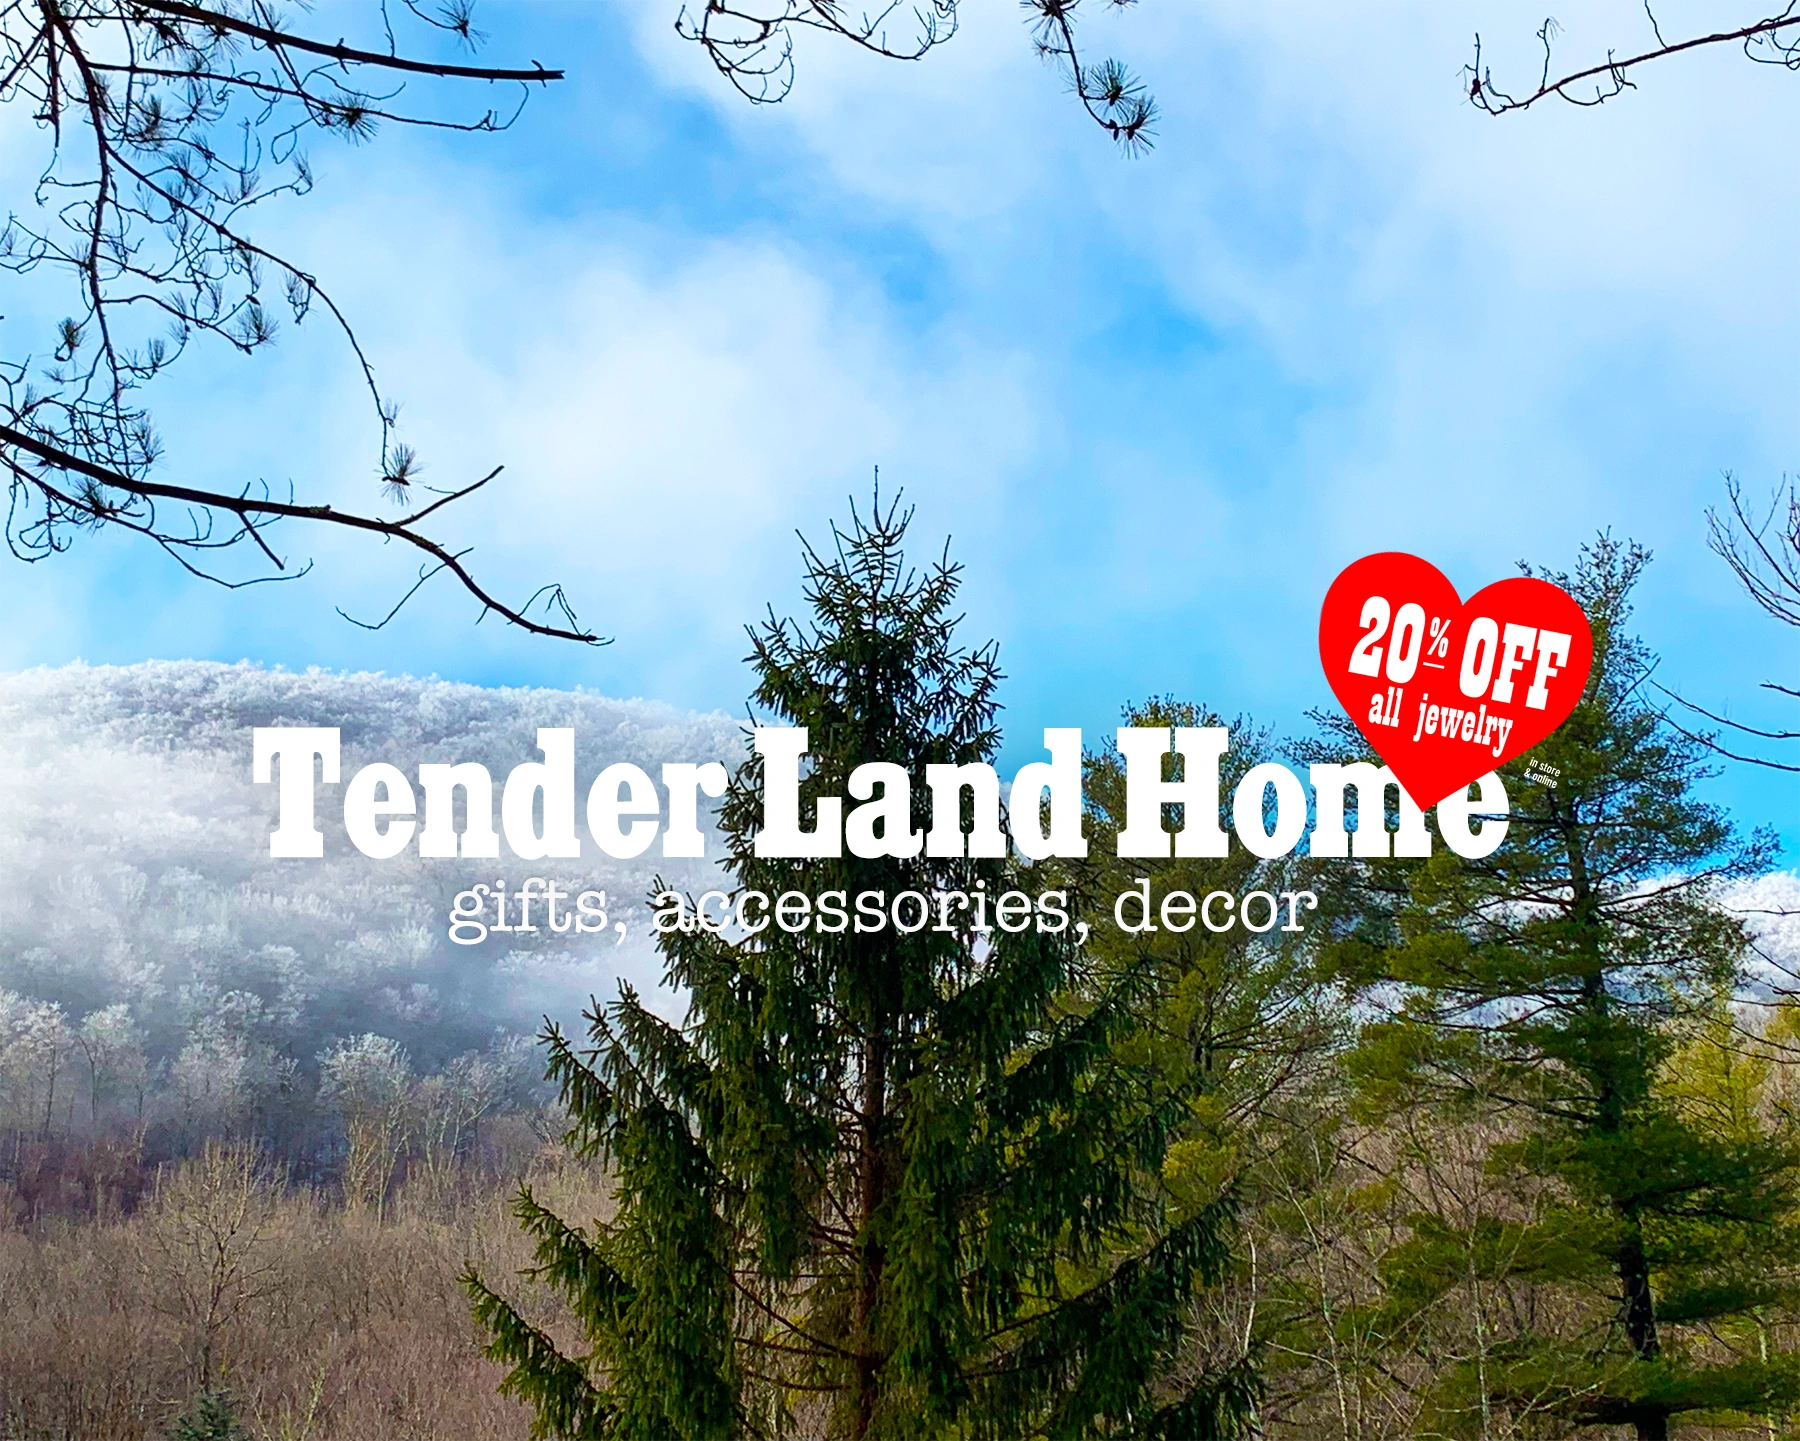 Tender Land Home